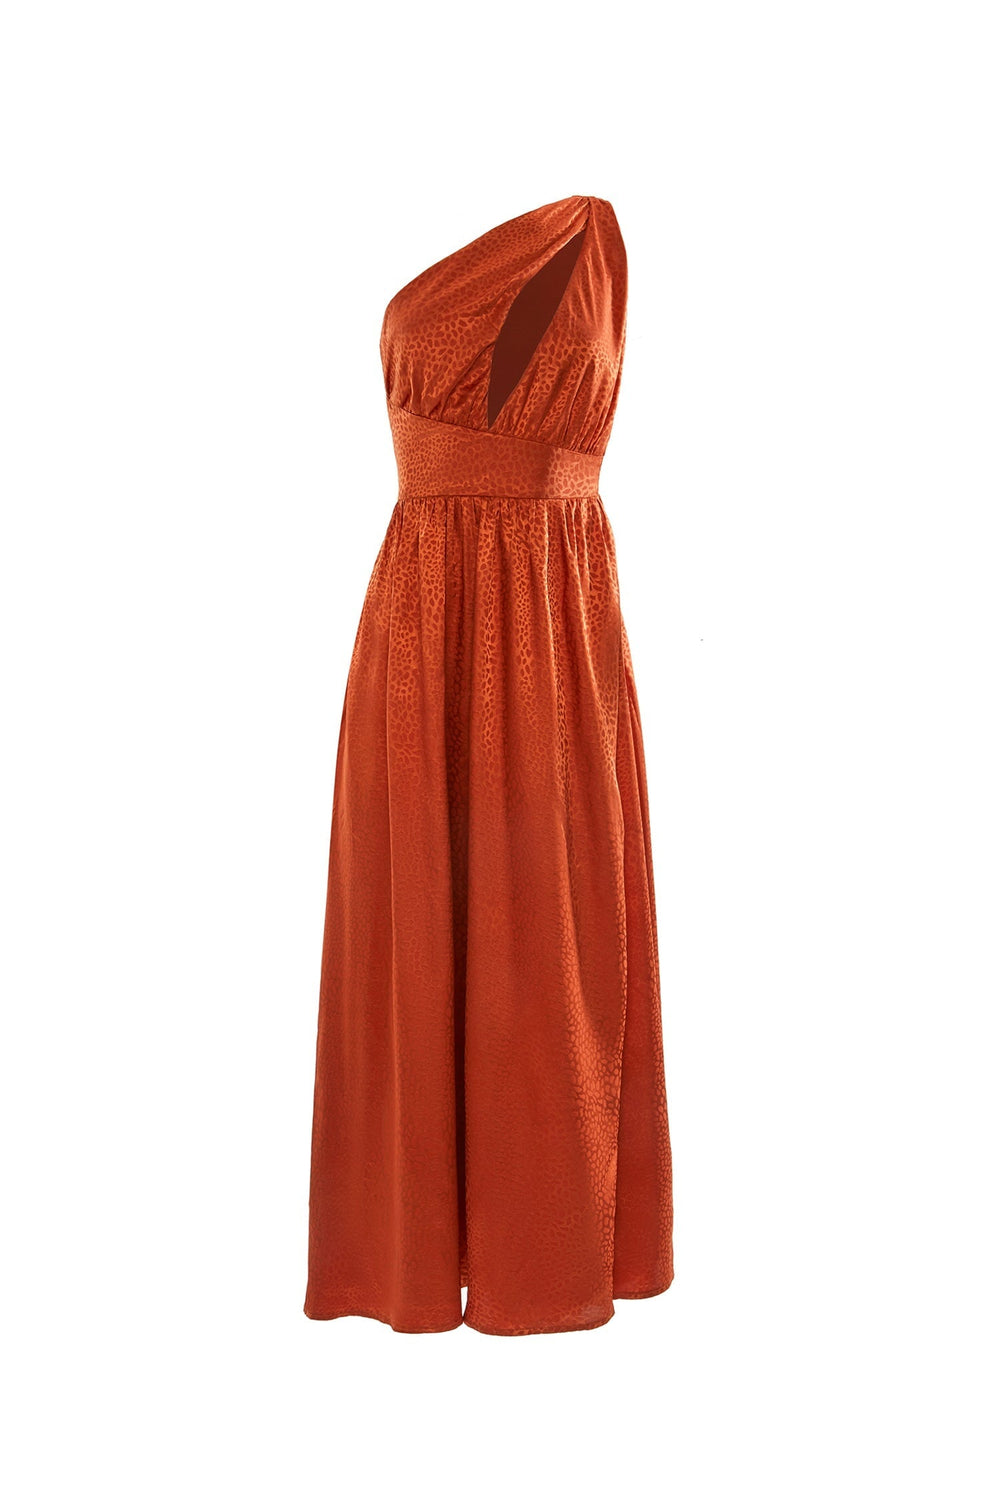 Eloisa Orange Rust Midi Dress with Bodice Cut-Out